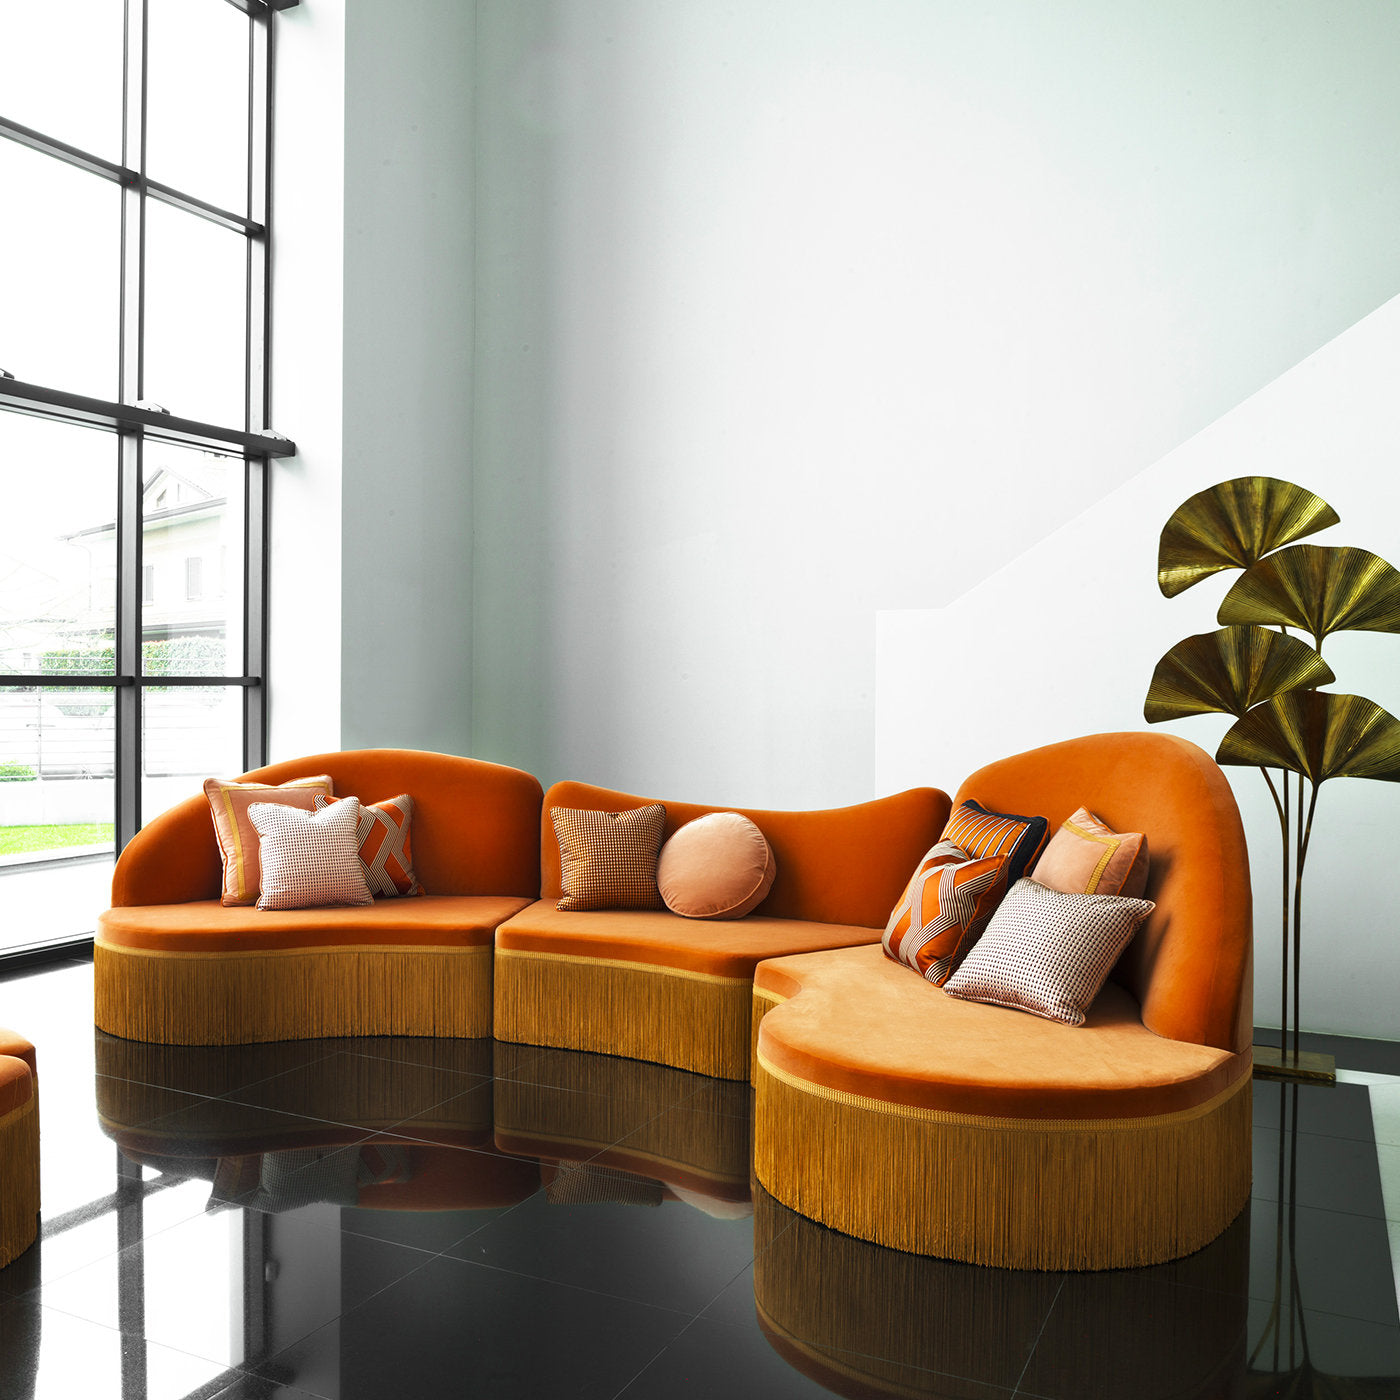 Wave Orange 3-Piece Sectional Sofa #2 - Alternative view 1